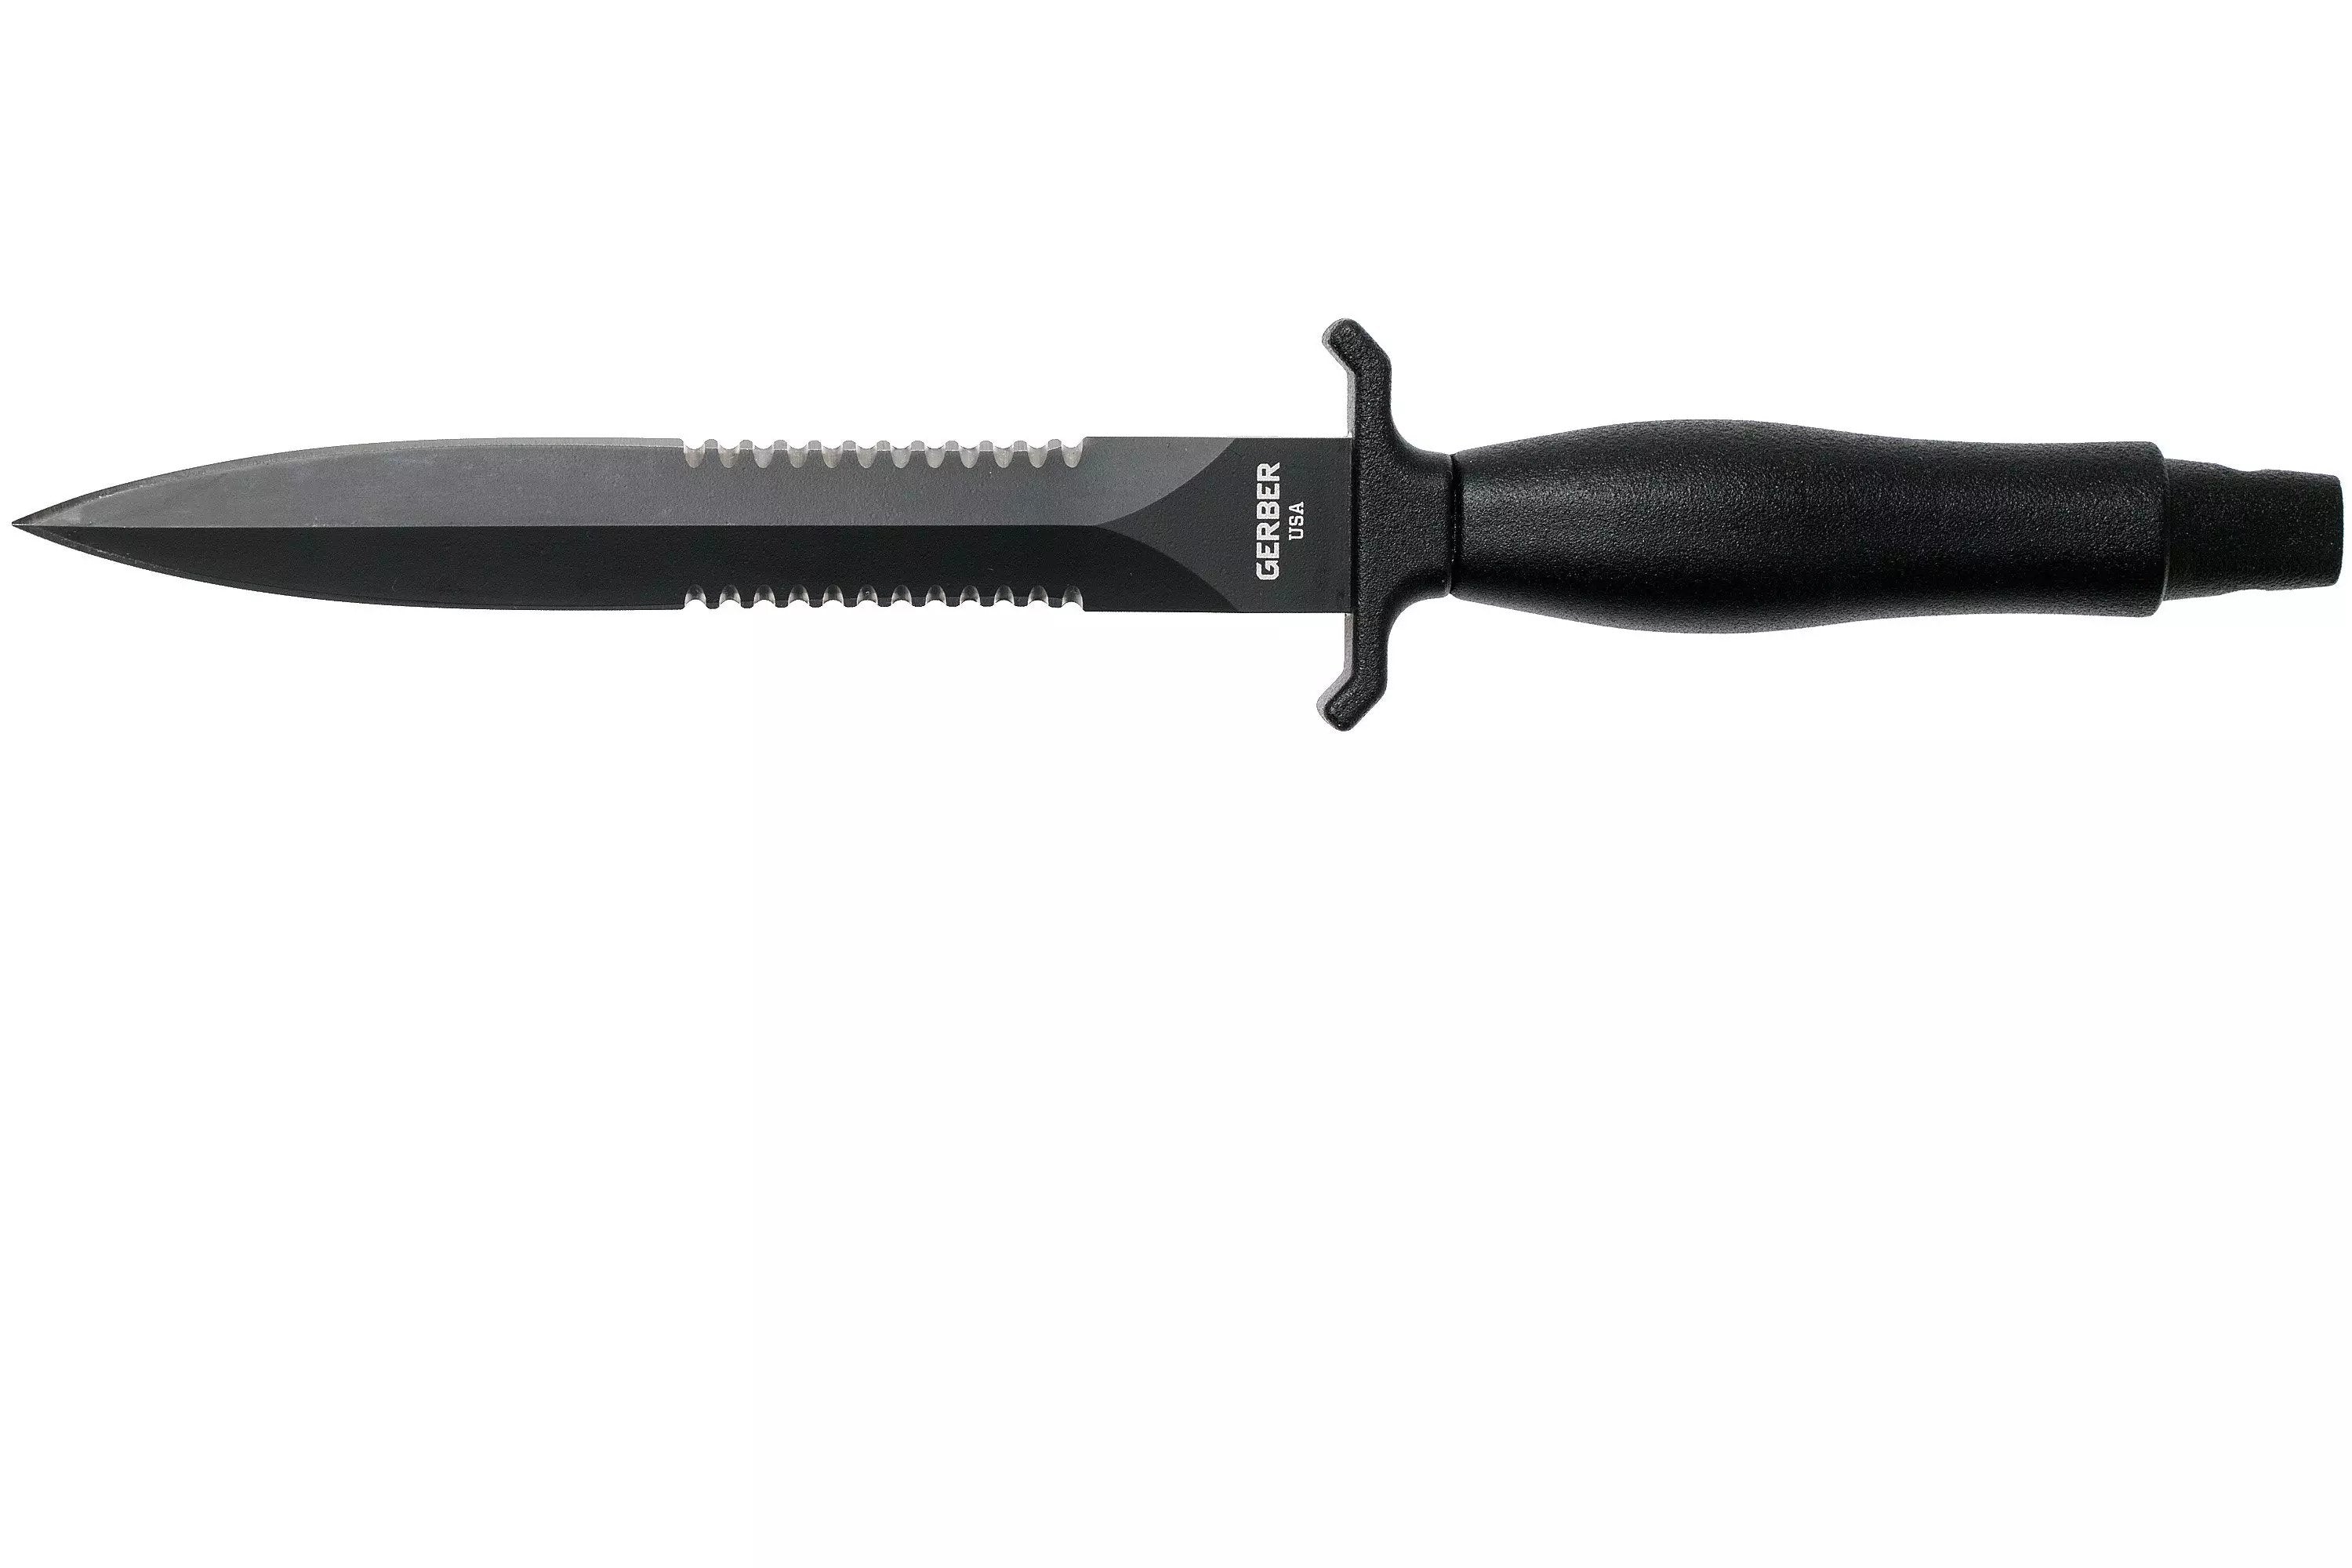 Gerber Mark II Fixed Blade - Double Serrated Blade - Aluminum Handle - 22-01874